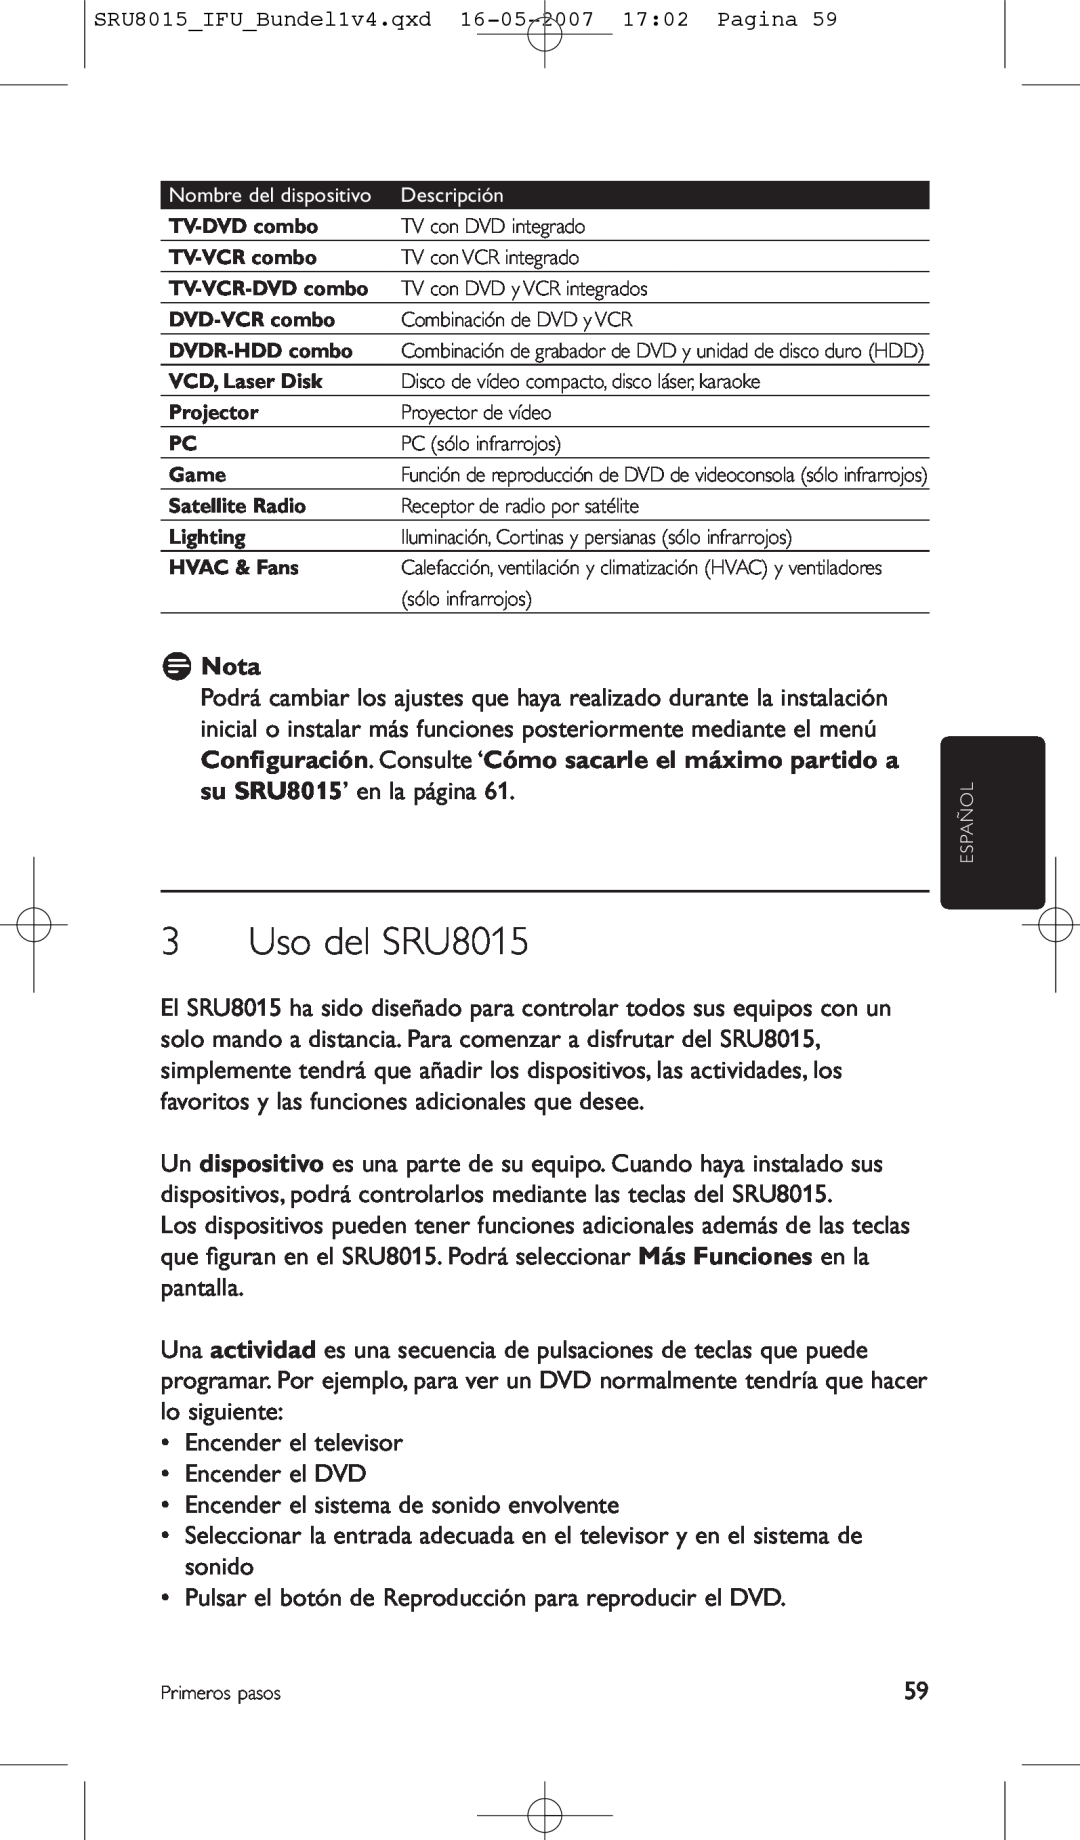 Philips manual Uso del SRU8015, D Nota 